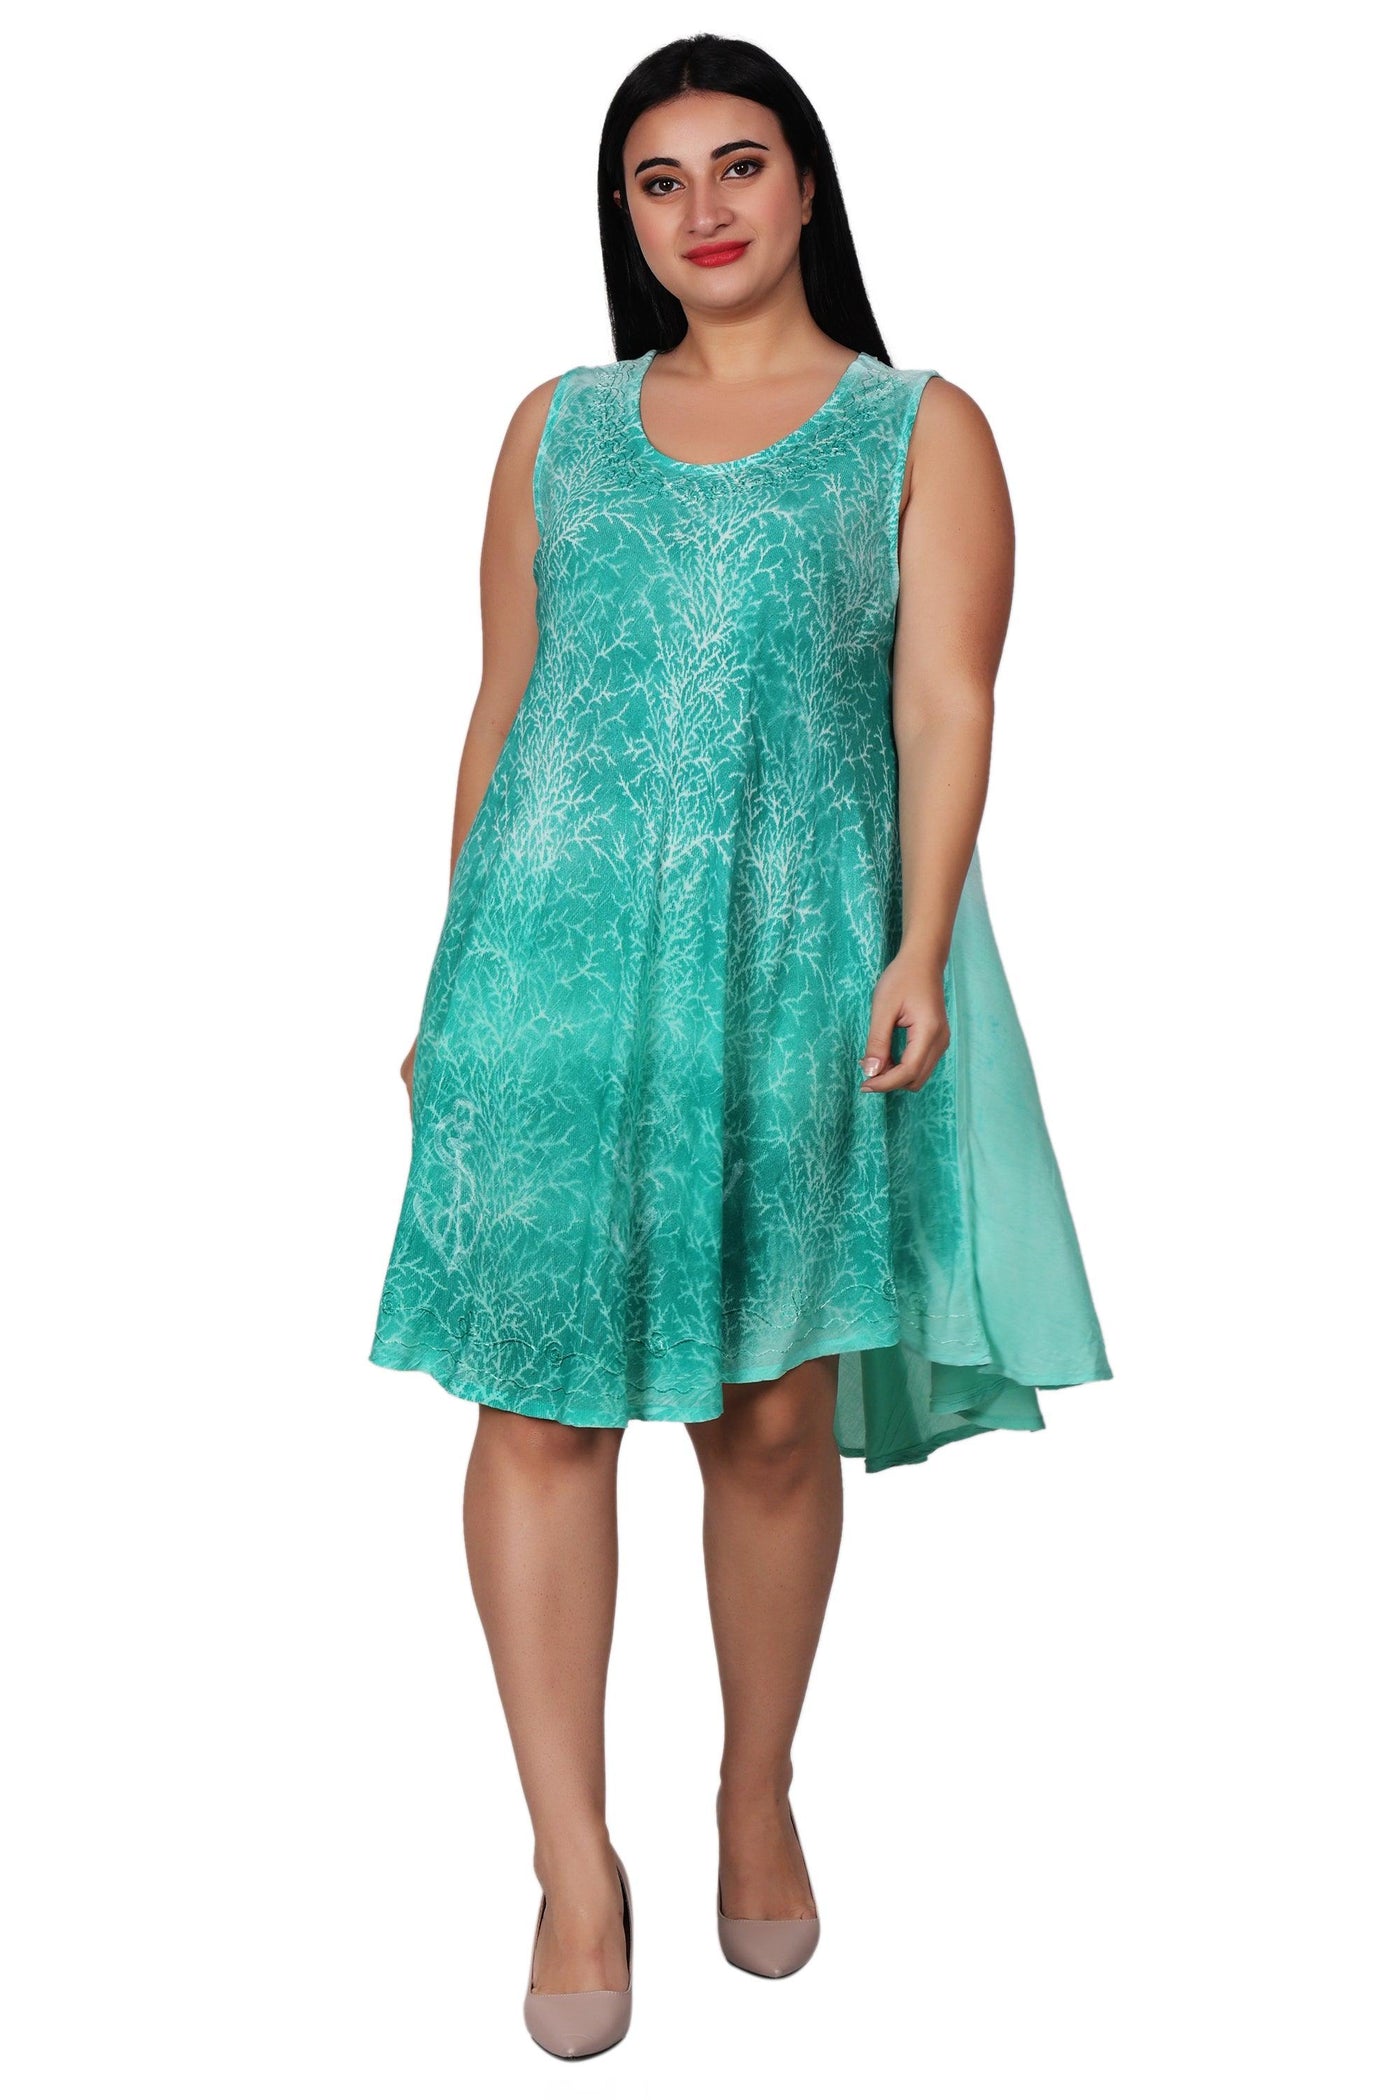 Anchor Block Print Double Dye Dress 362169R  - Advance Apparels Inc